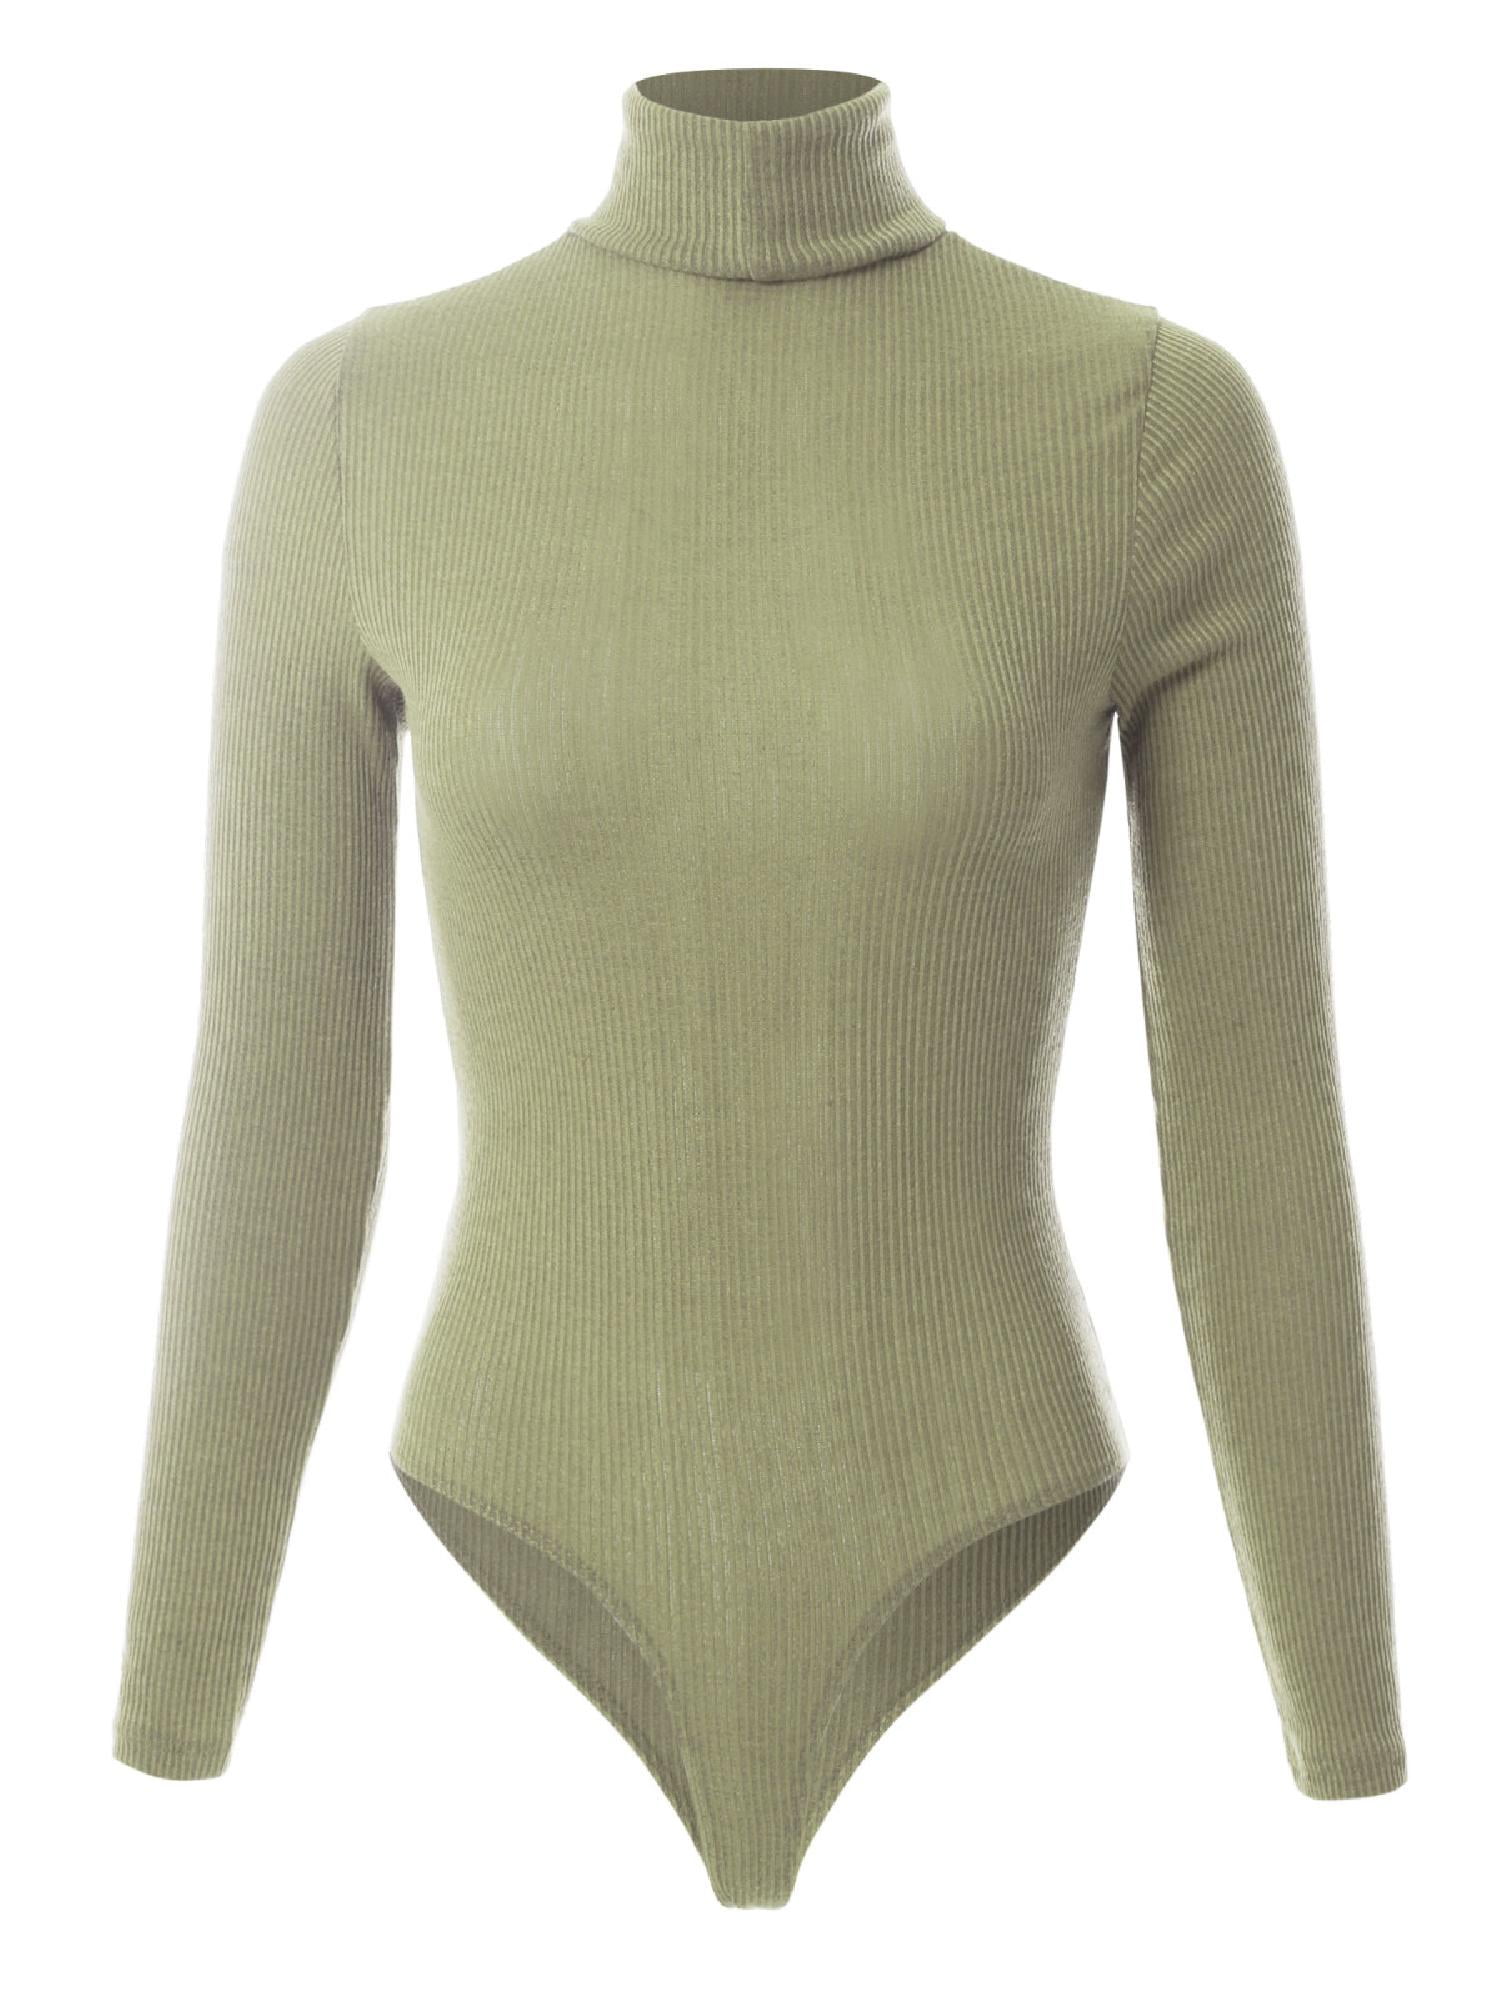 MixMatchy Women's Long Sleeves Ribbed Sweater Turtleneck Bodysuit Leotard 